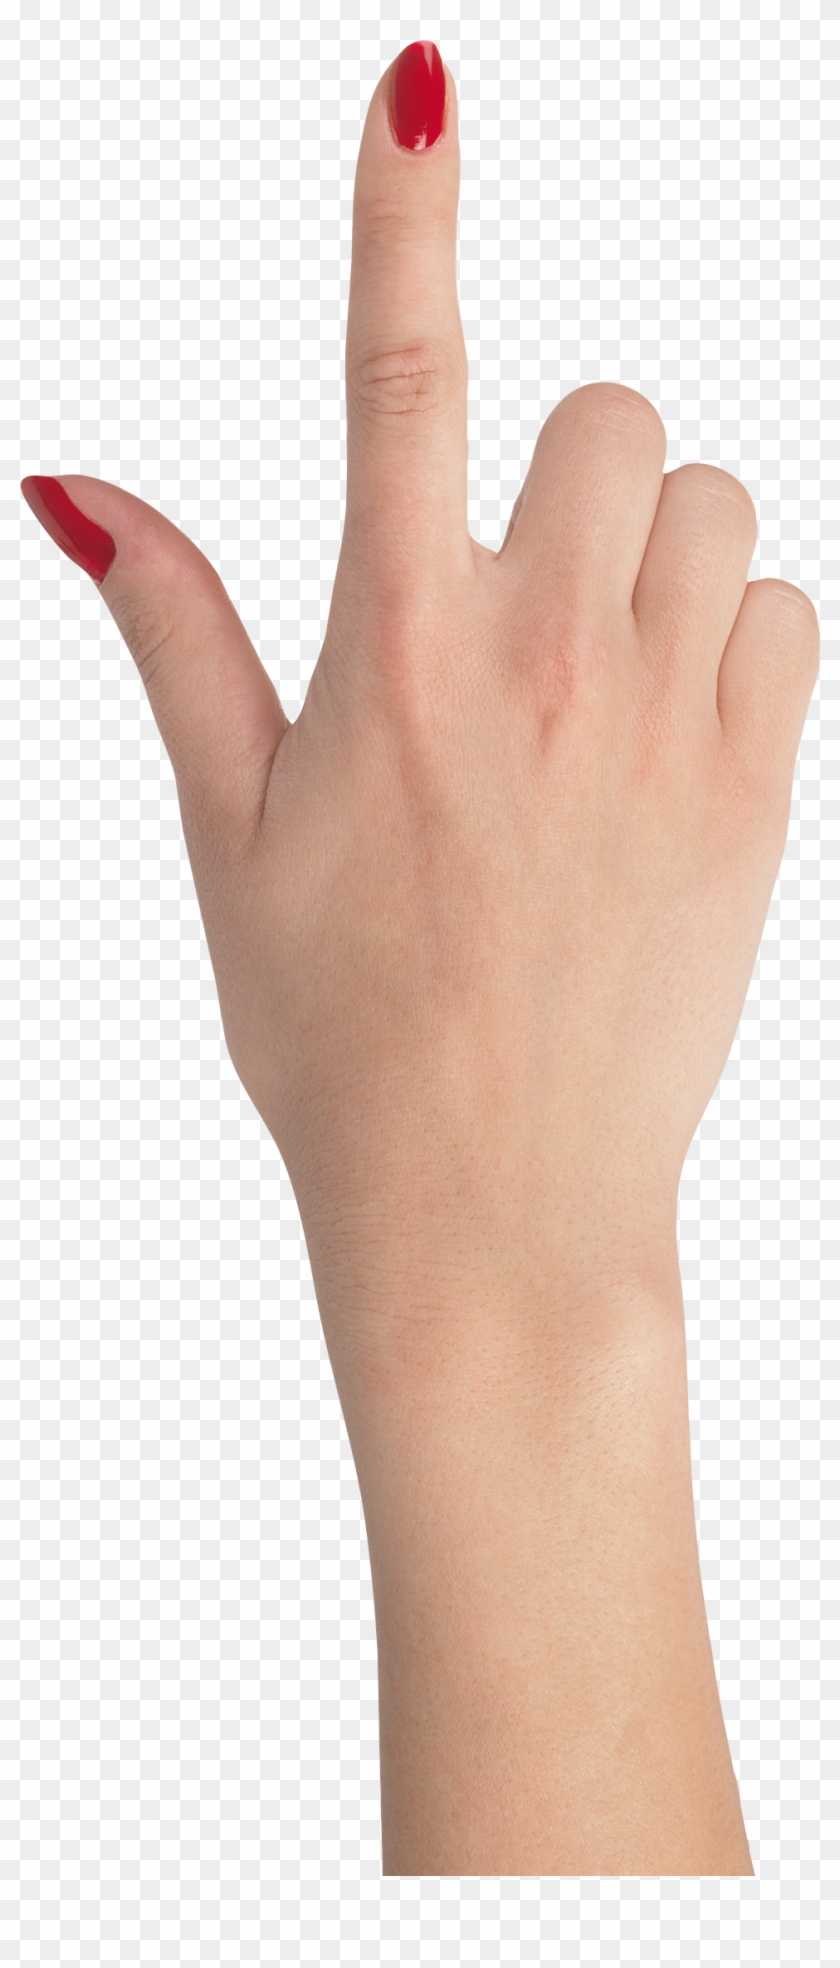 Finger Png Image Finger Hands, First Finger, Hand Images, - Red Nail Hands Png Clipart #447560